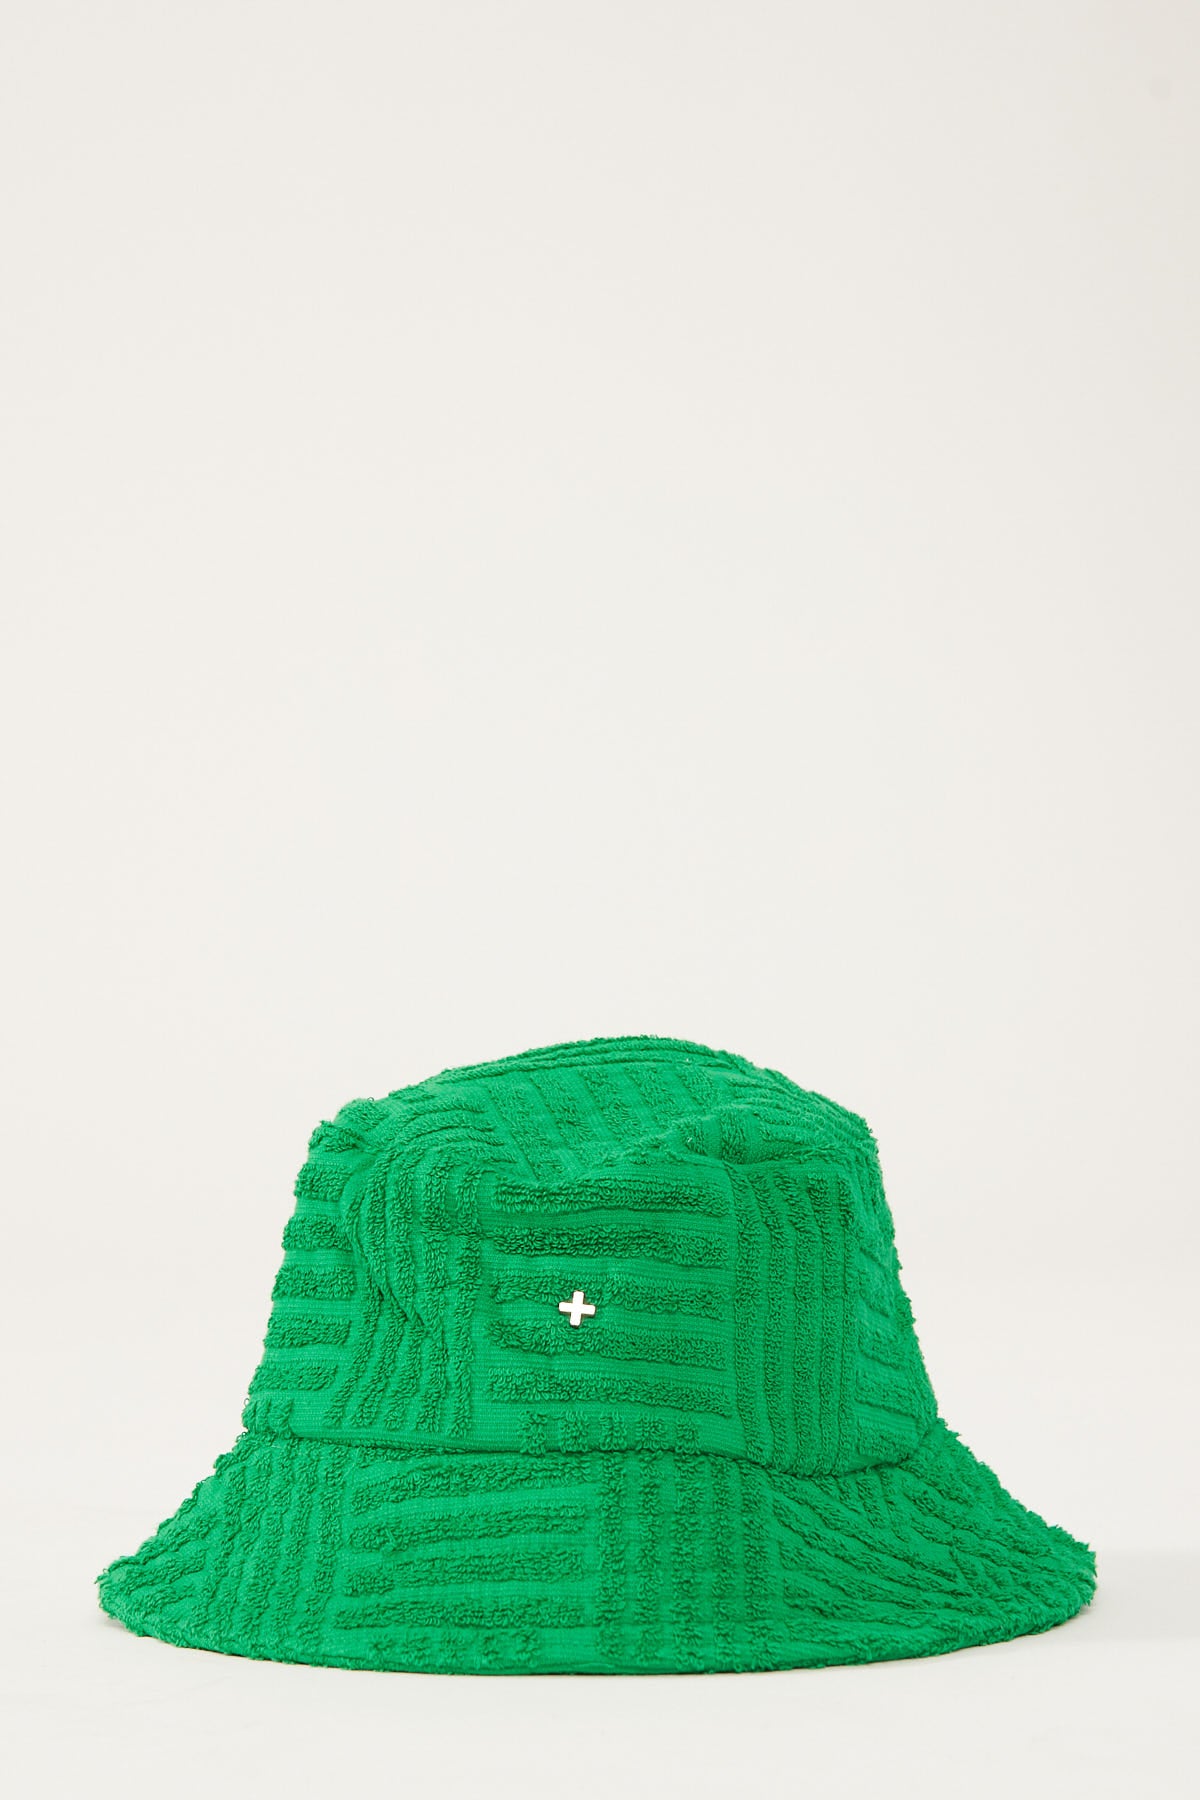 Peta + Jain Soleil Hat Green